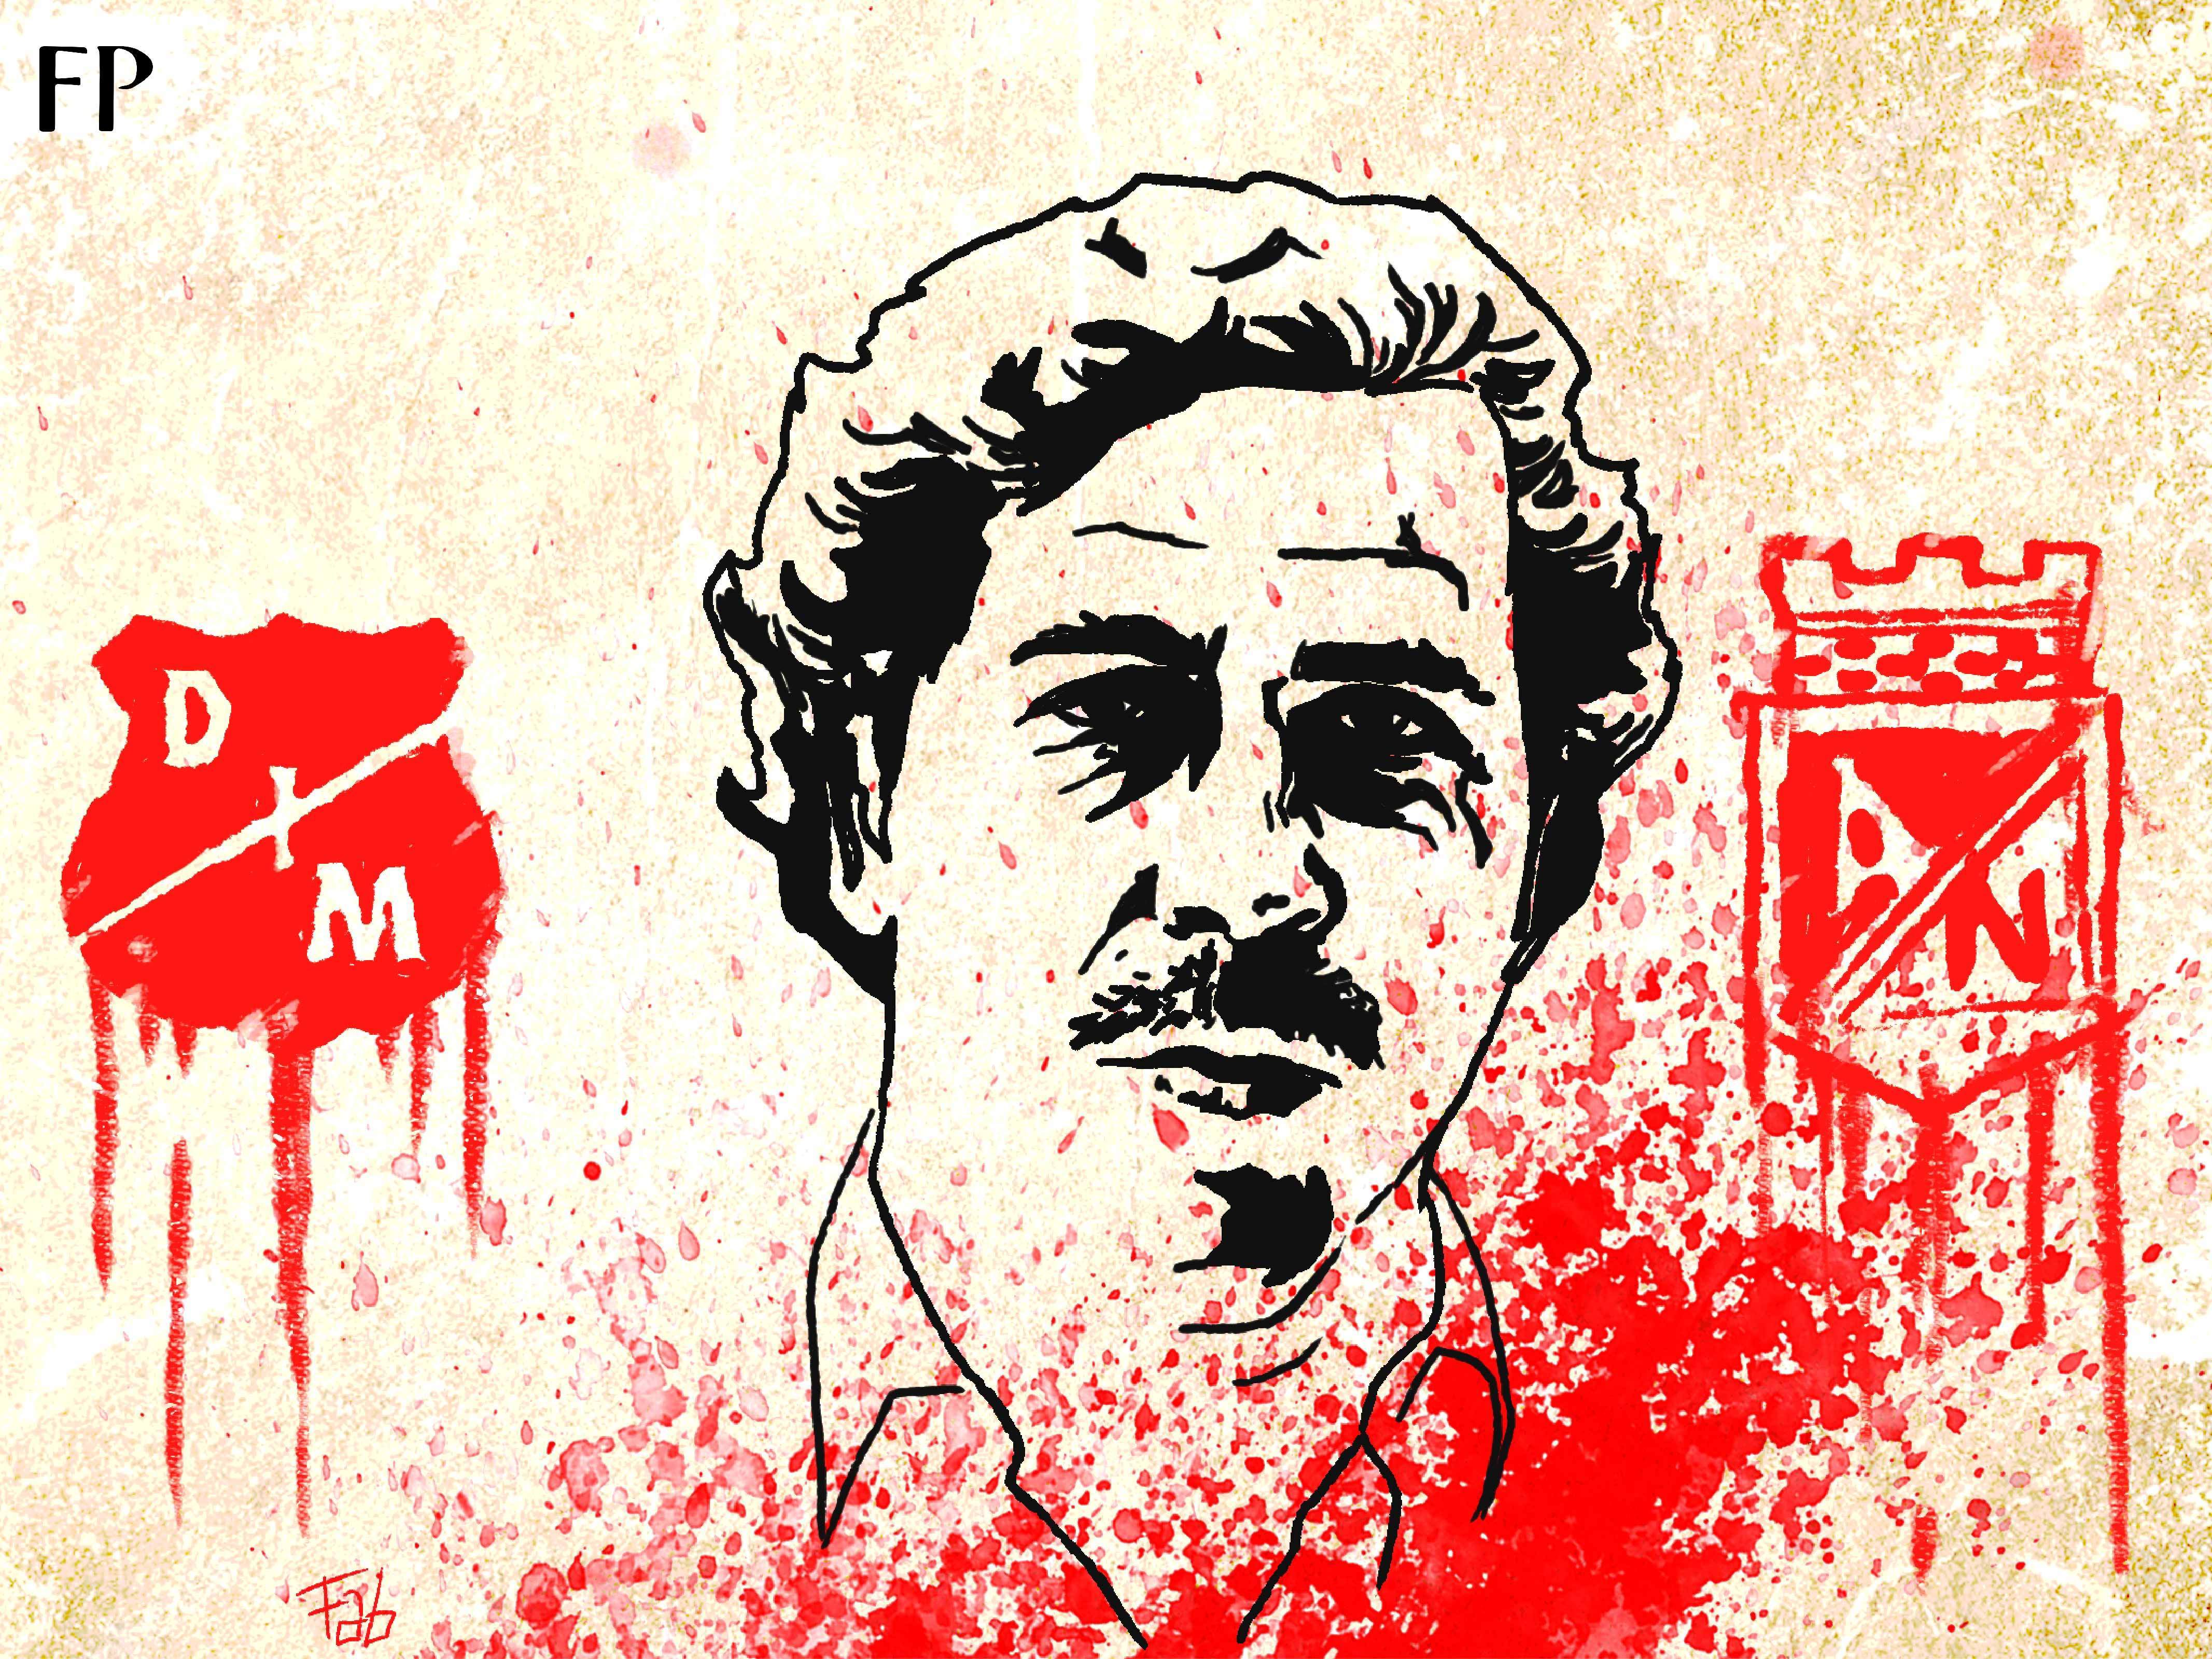 Wallpaper ID 1079570  Pablo Escobar 2K Wagner Moura Netflix Narcos  free download